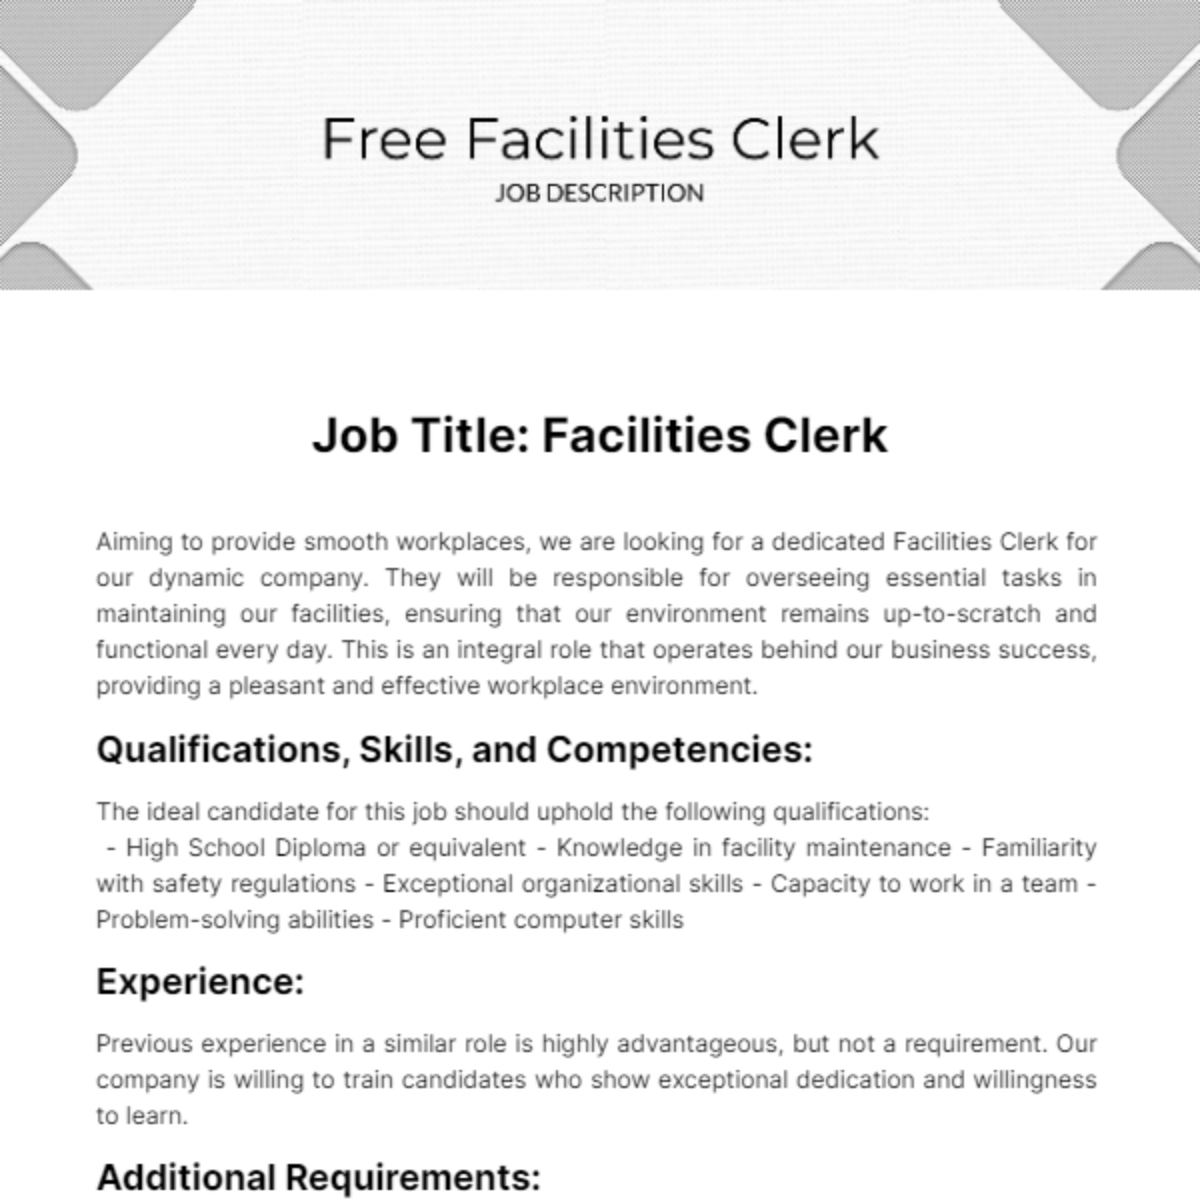 Free Facilities Clerk Job Description Template